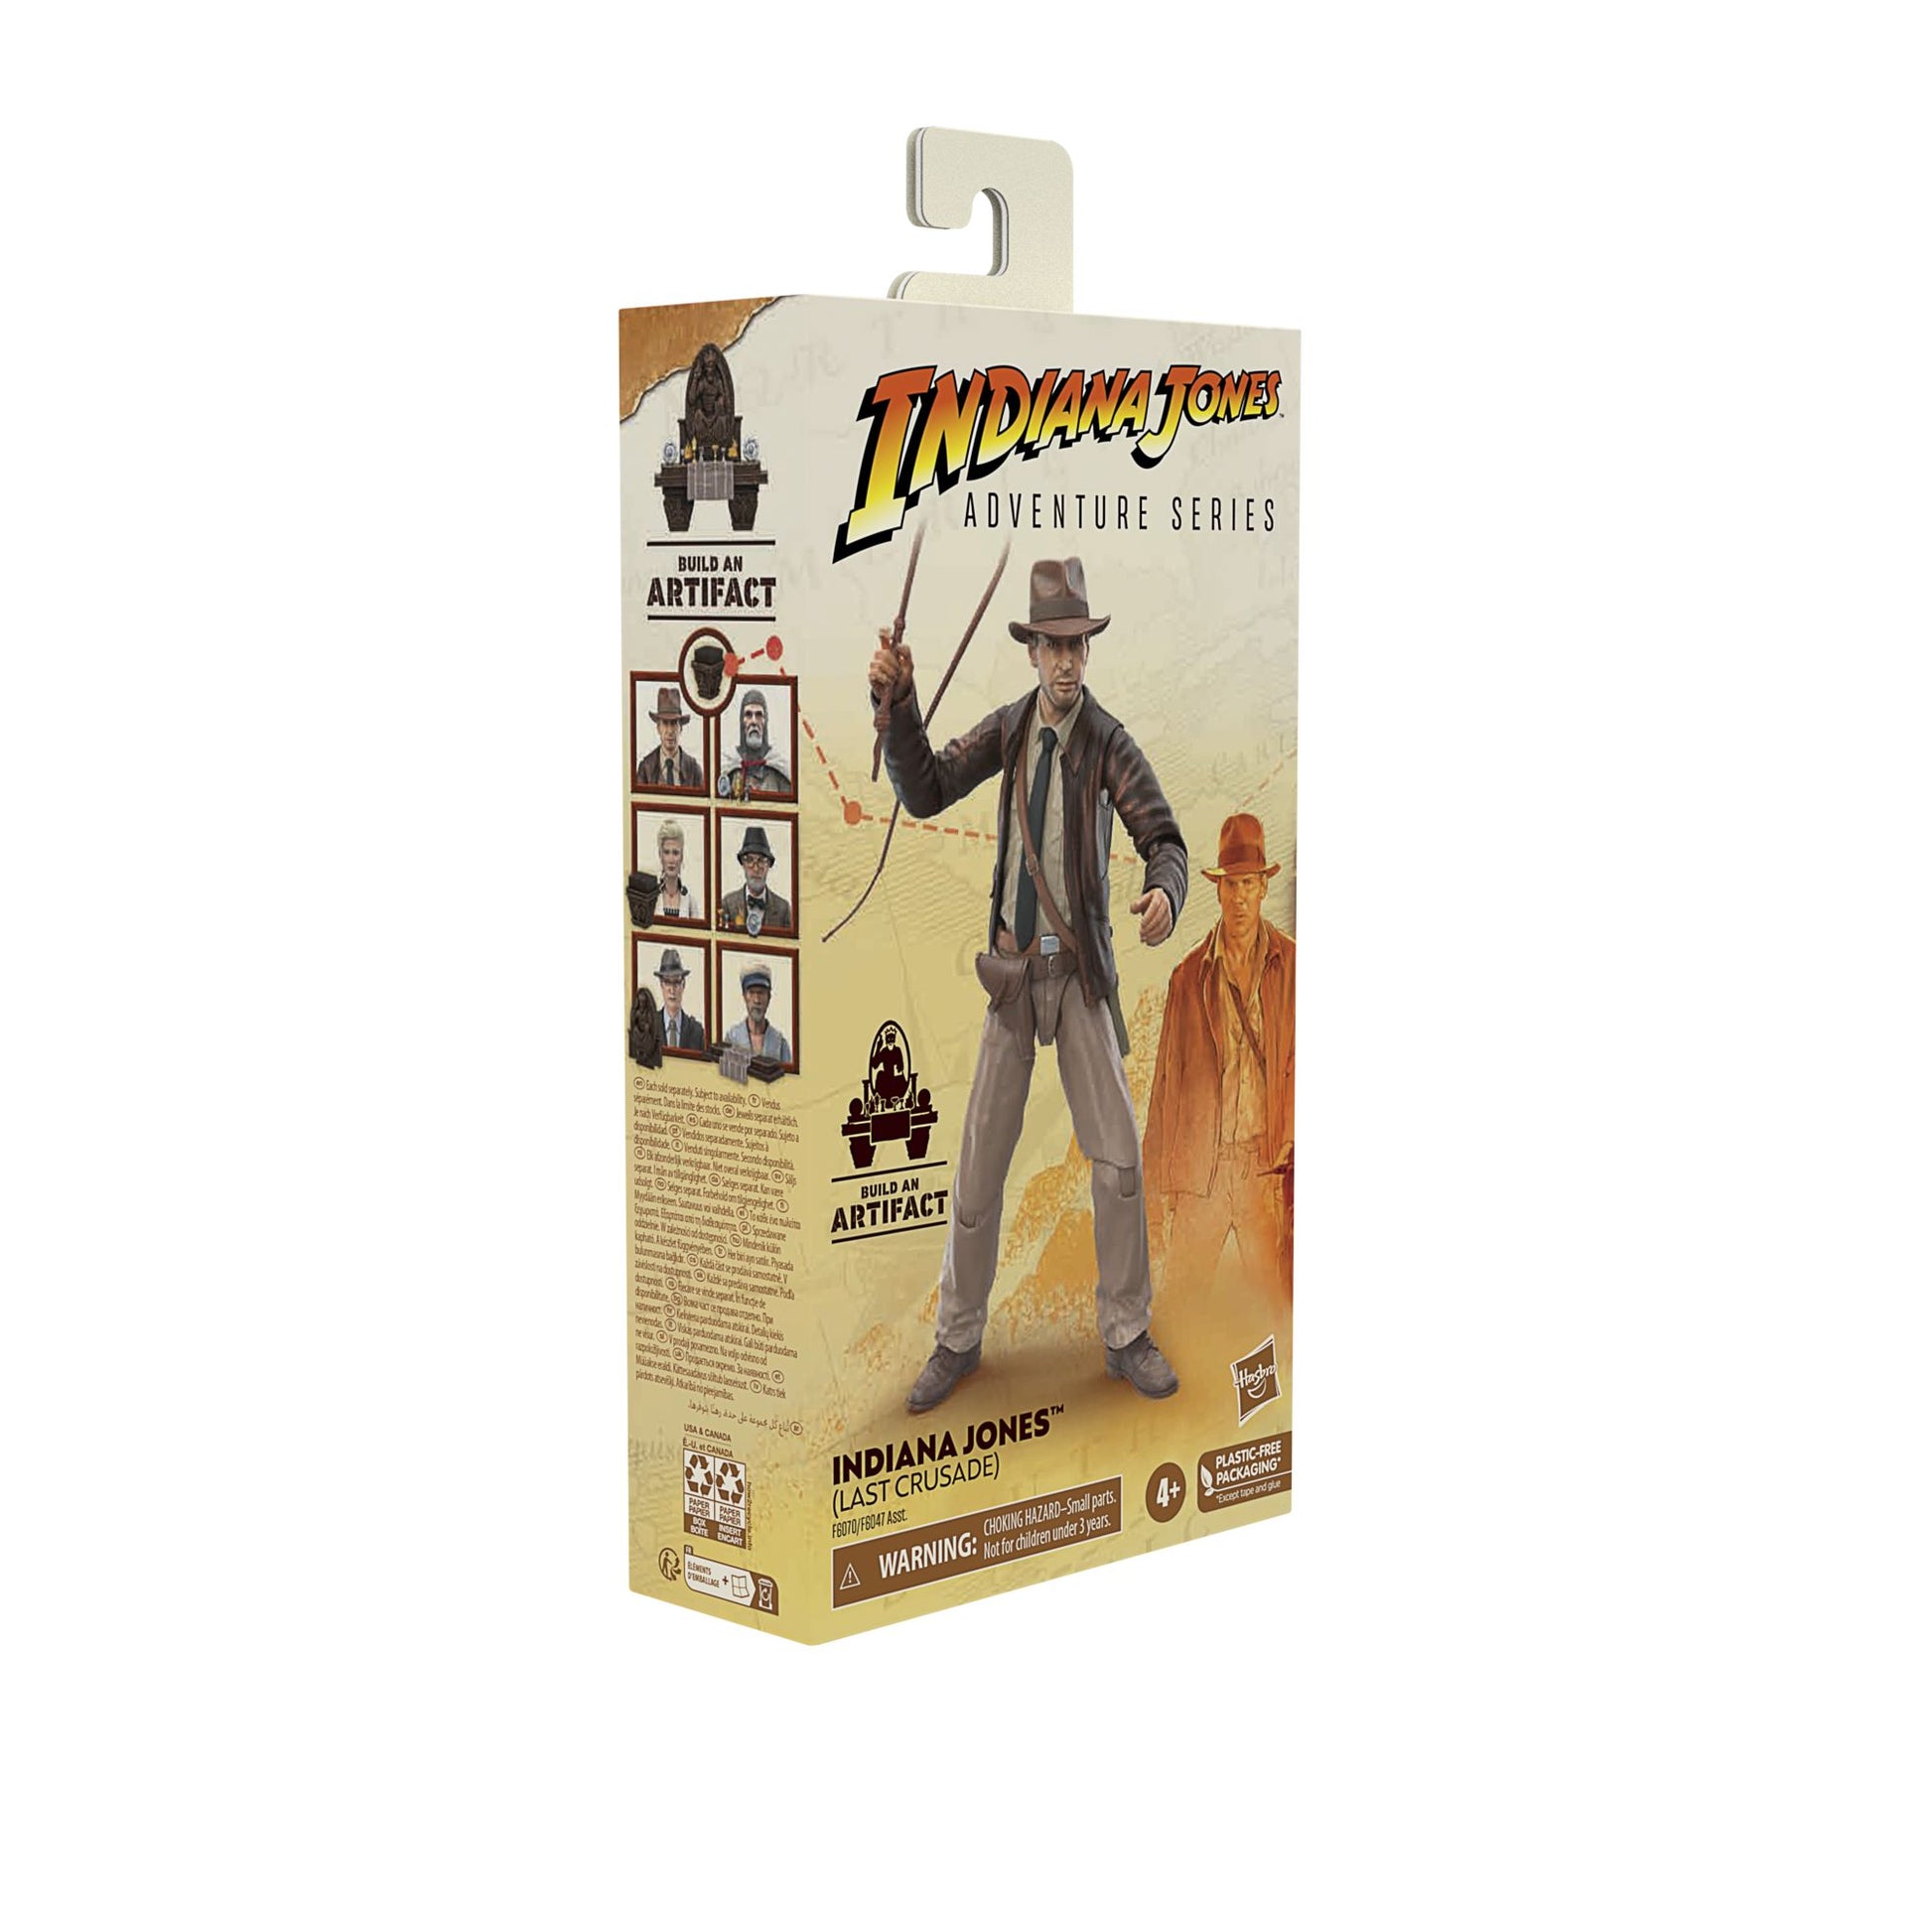 Indiana Jones Adventure Series Indiana Jones (Last Crusade) in a box - Heretoserveyou